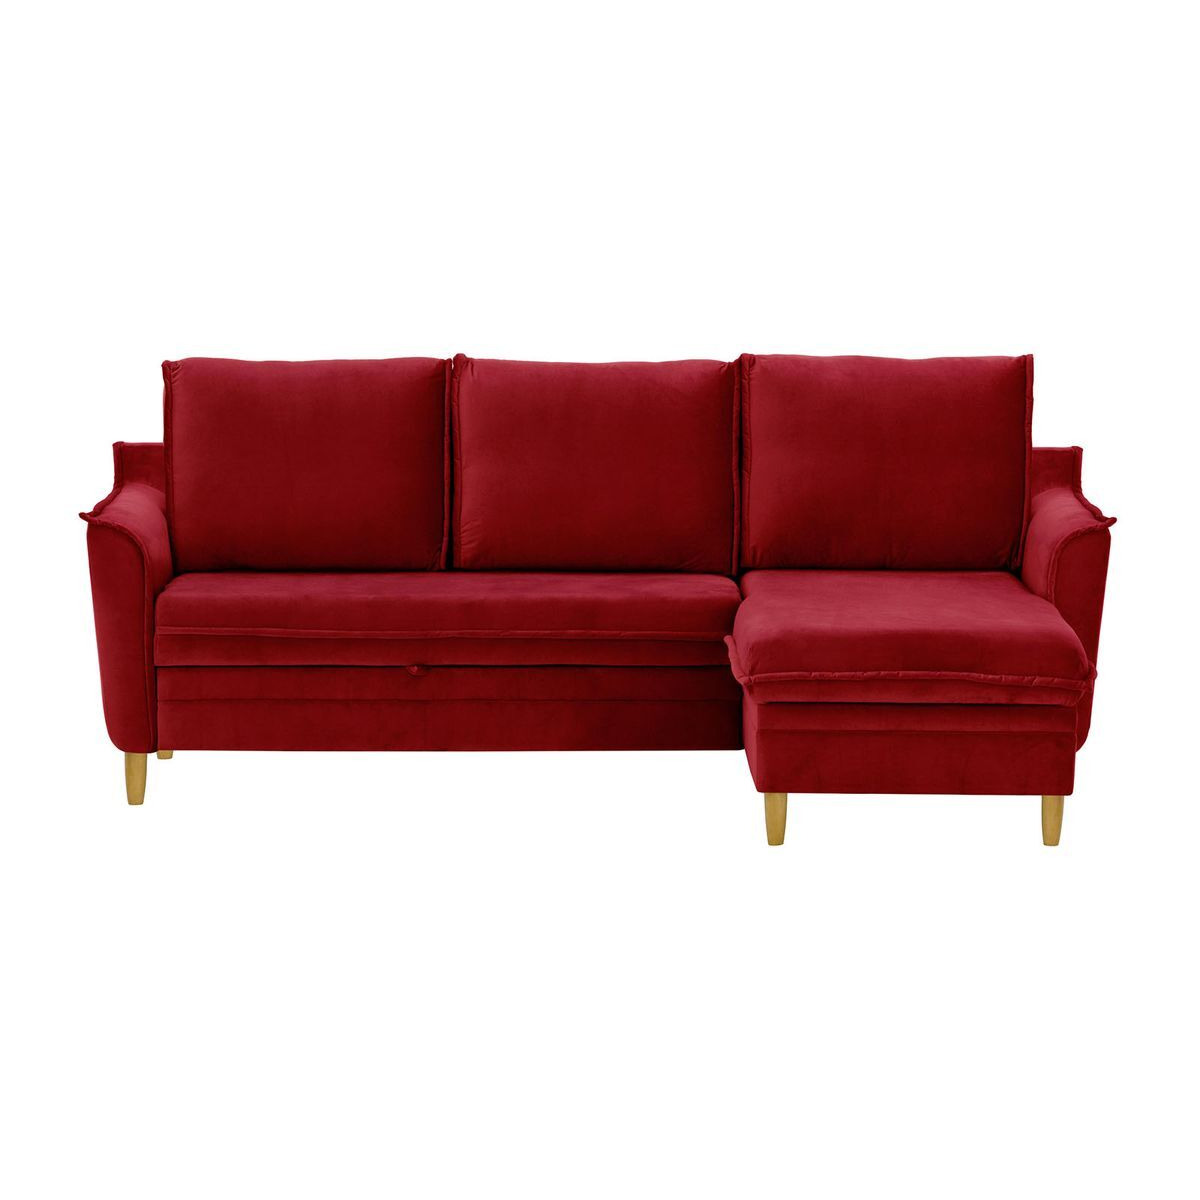 Amour Corner Sofa Bed With Storage, dark red - image 1